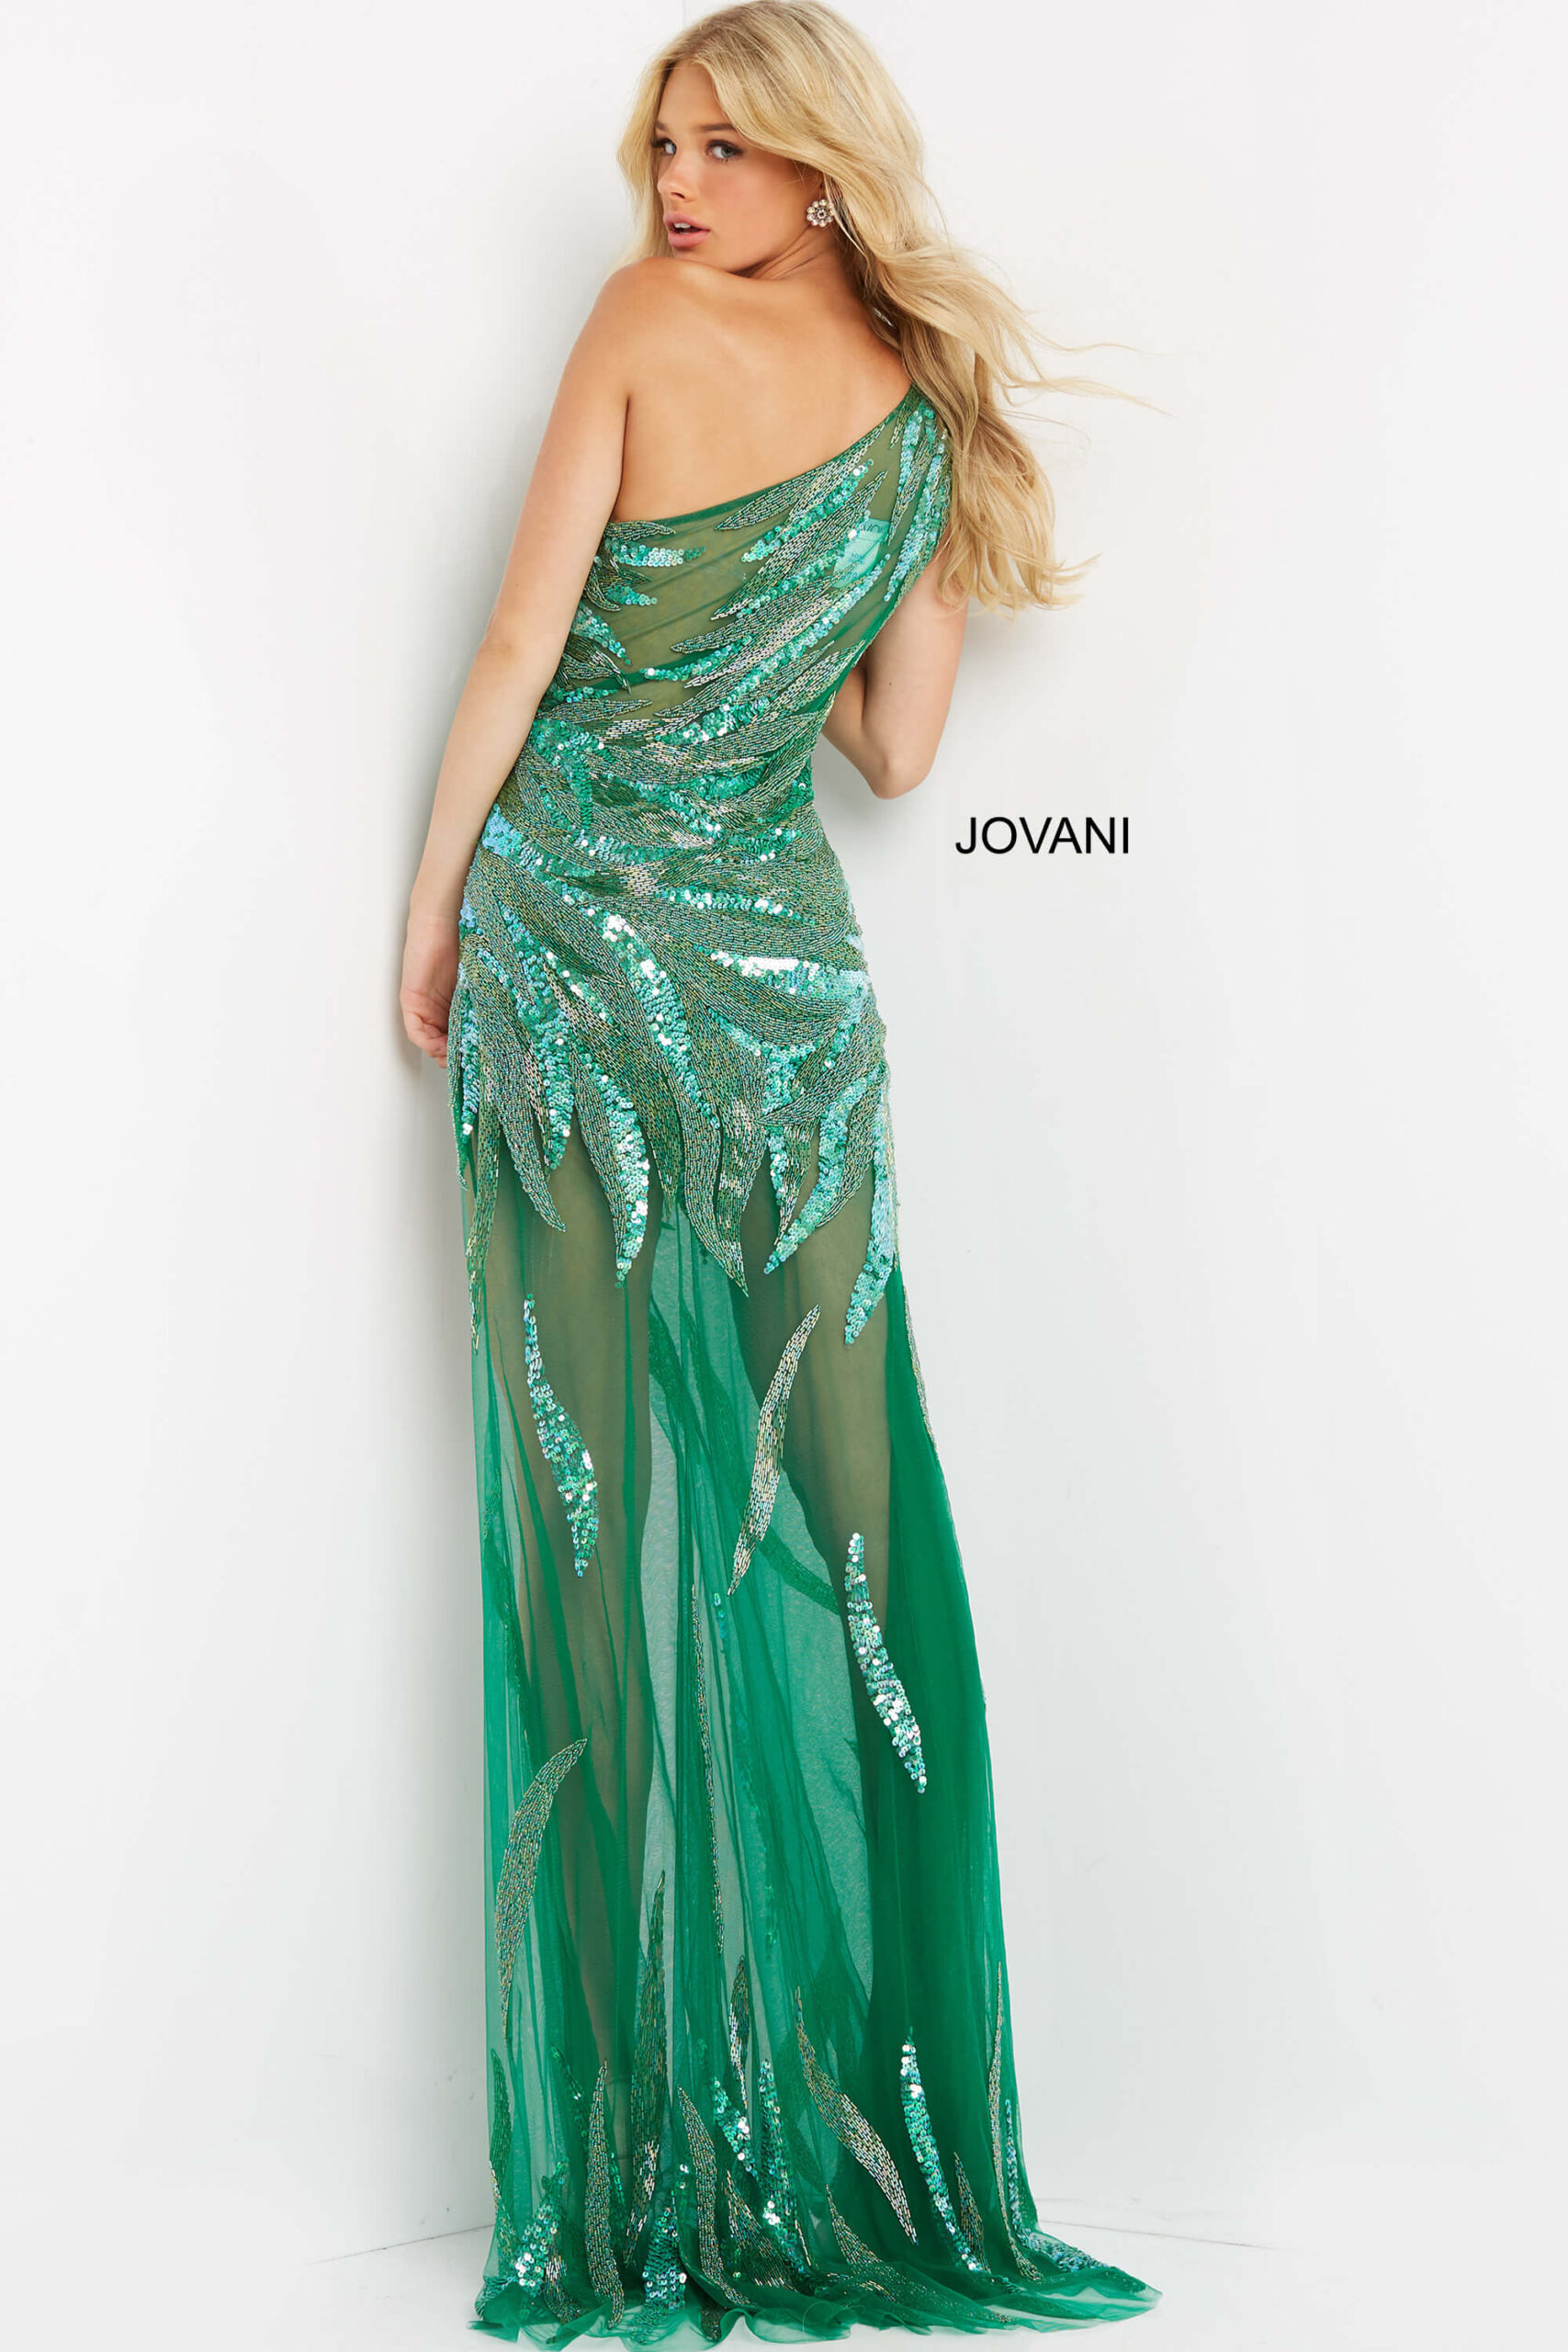 Jovani 07948 Green Beaded One Shoulder Dress